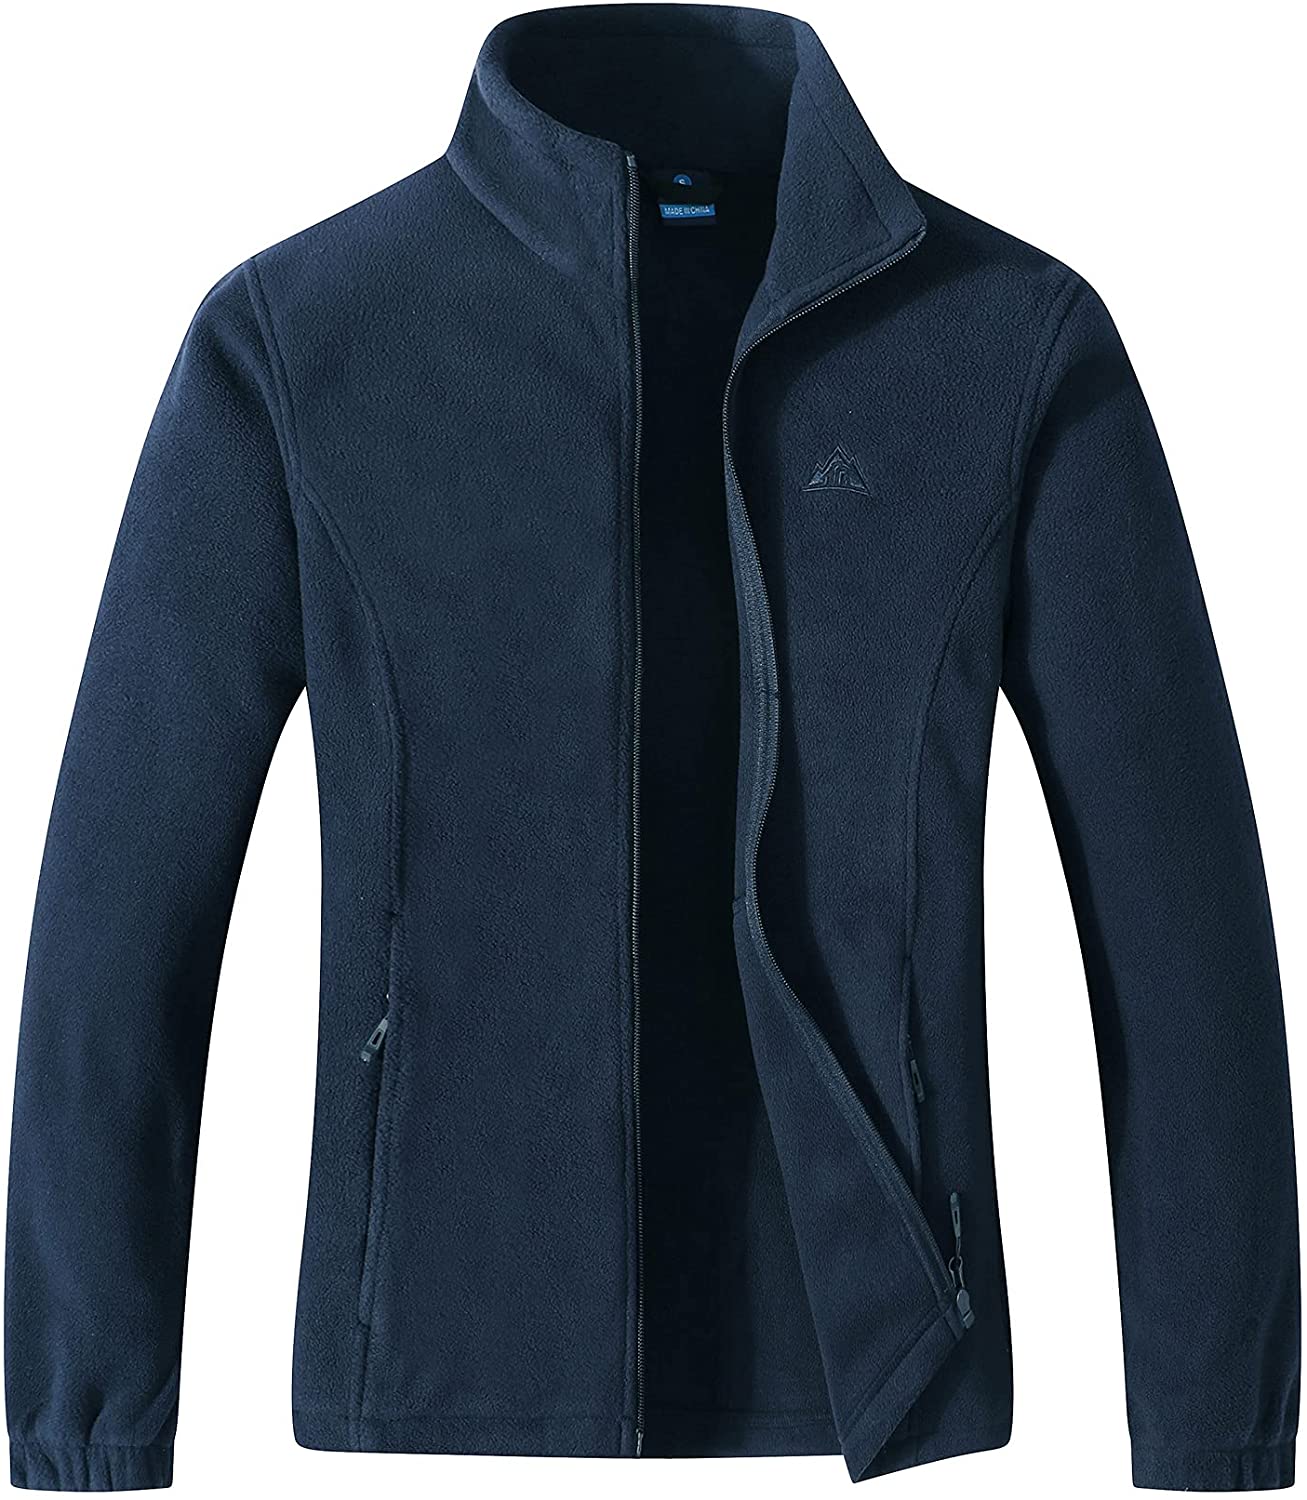 Women's Lightweight Full Zip Soft Polar Fleece Jacket Outdoor Recreation Coat With Zipper Pockets